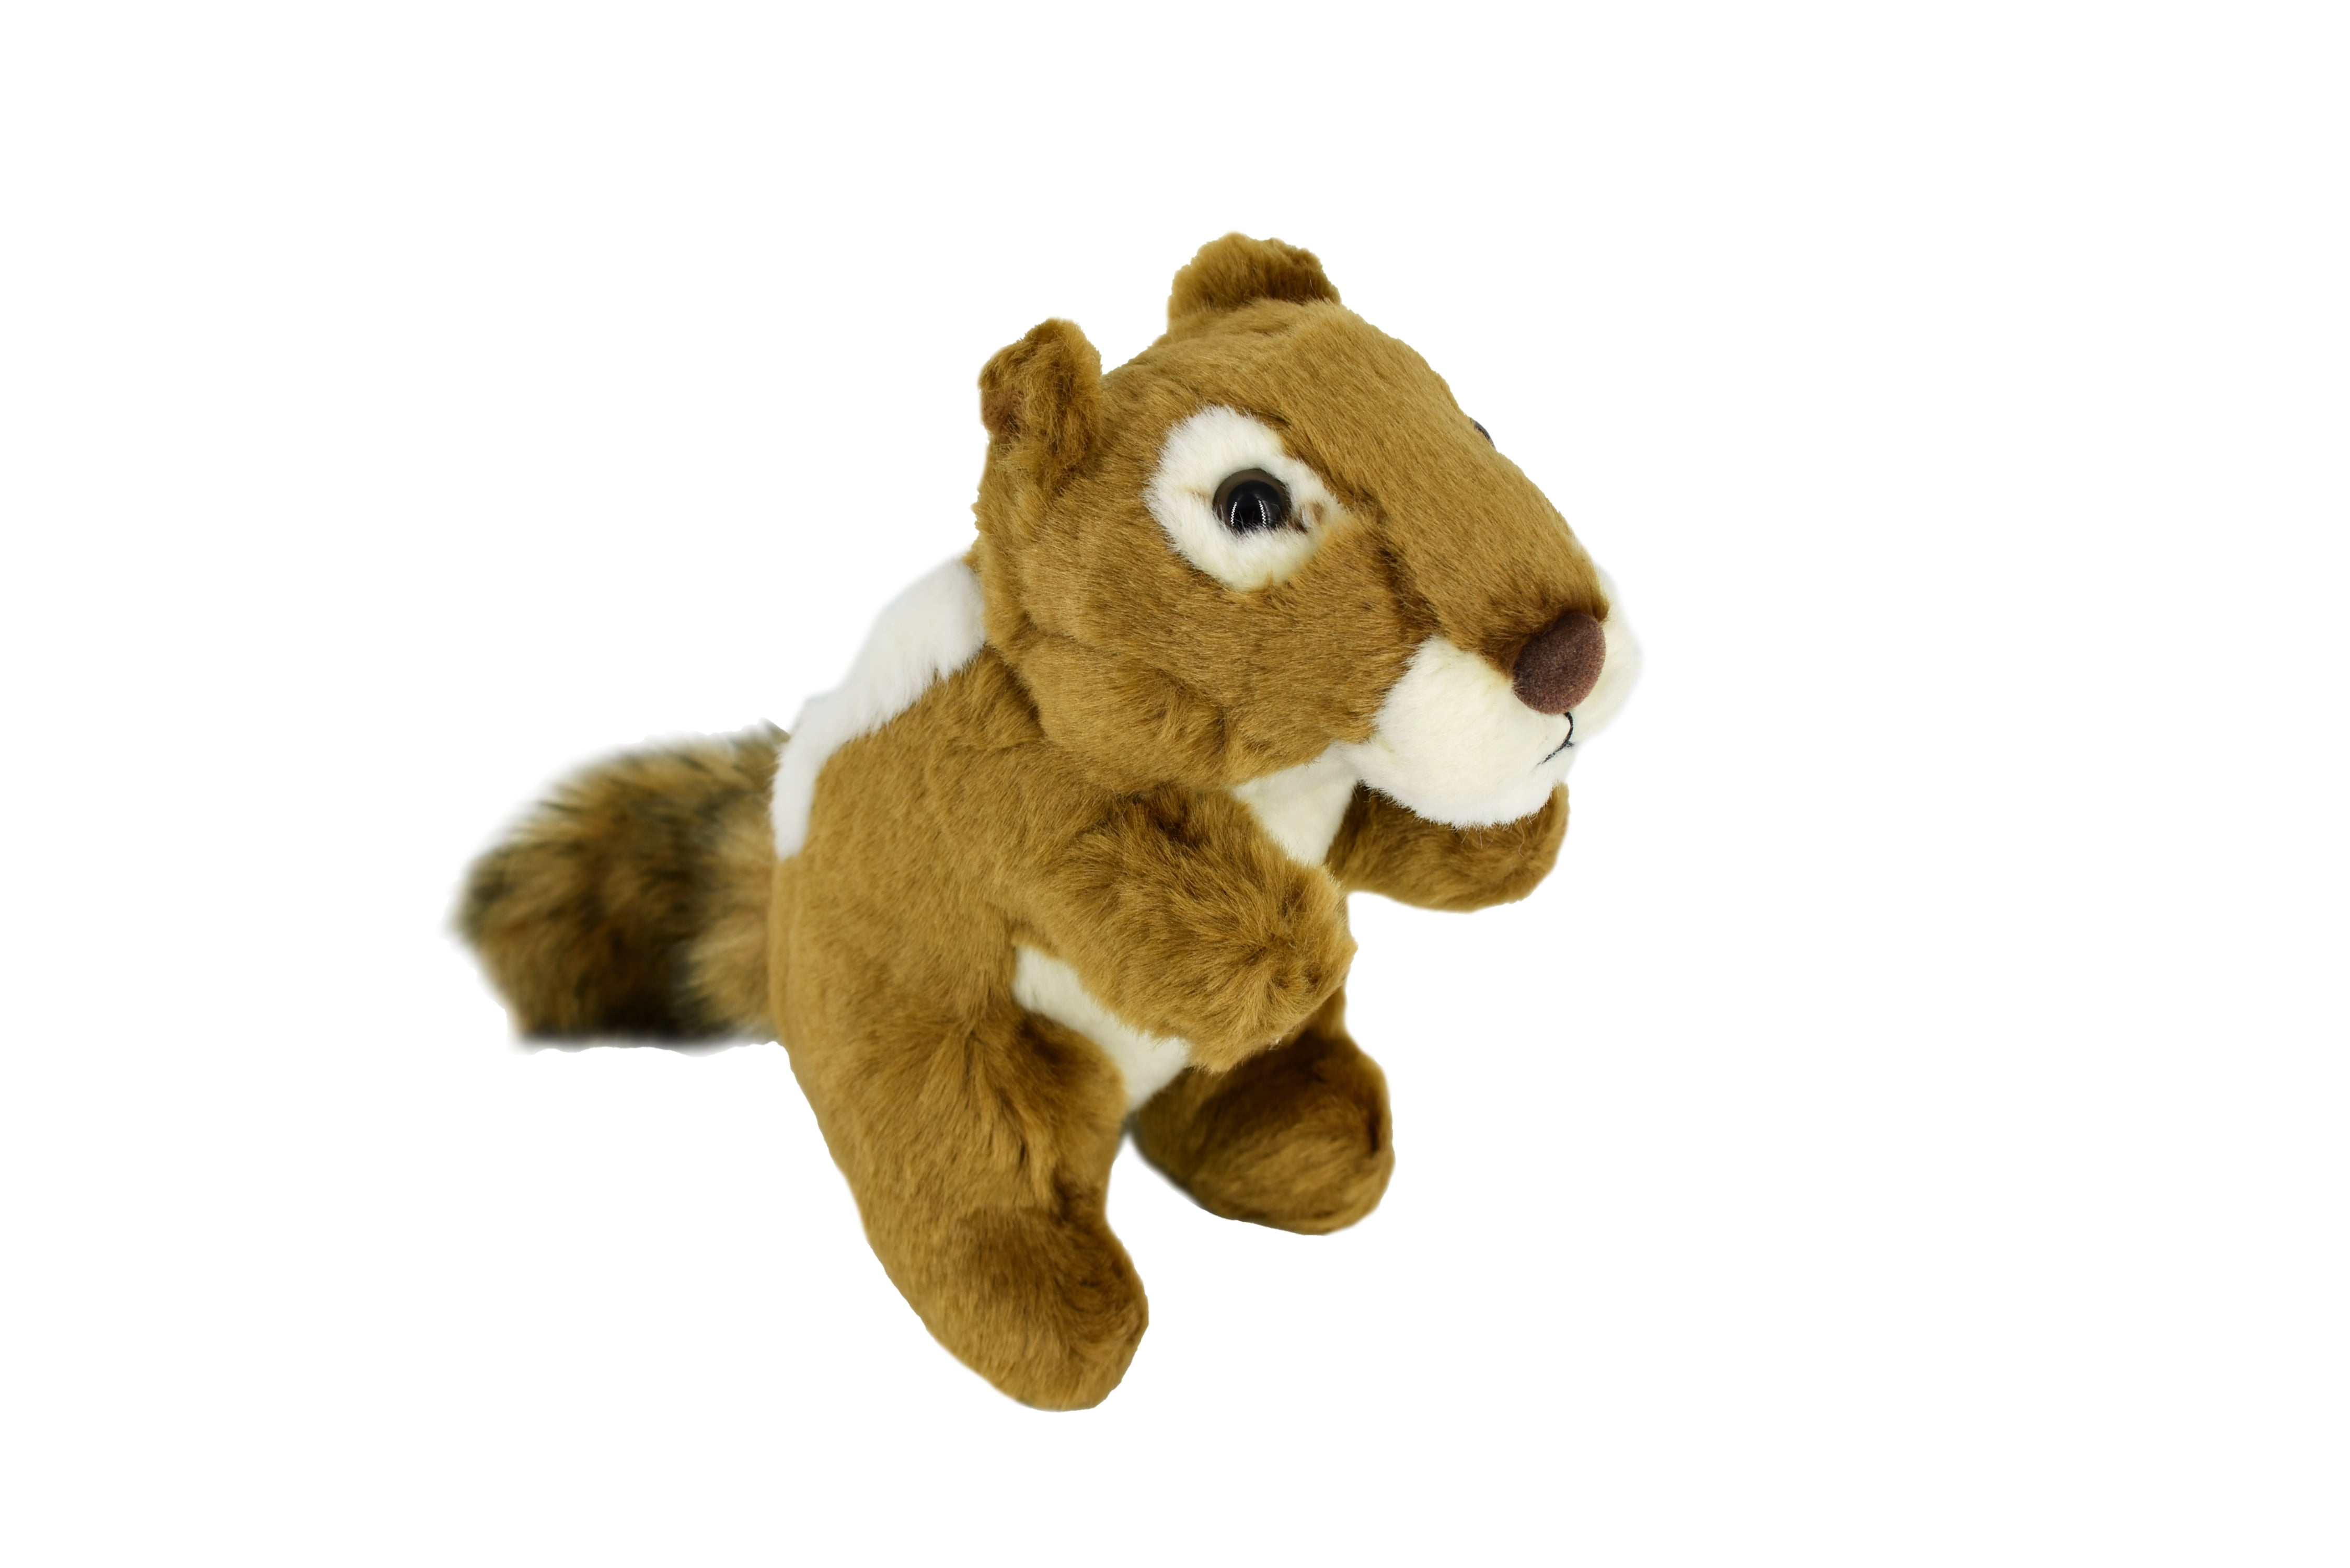 Chipmunk Mimic Talks Back Plush Early Learning Kids Toy Animal Mighty Mojo